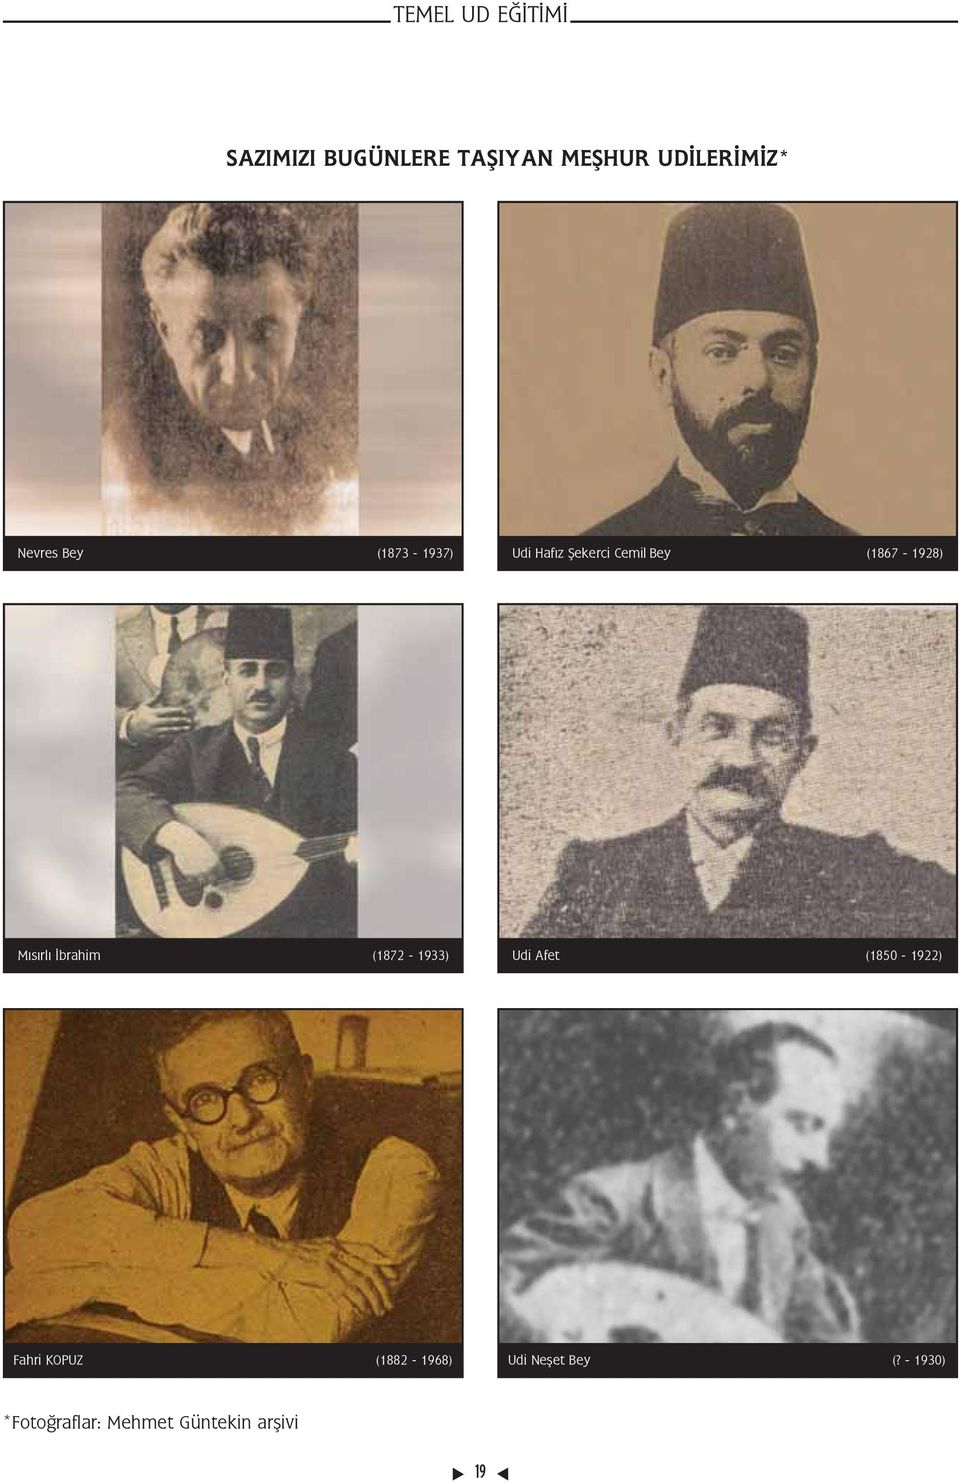 Ýbrahim (1872-1933) Udi Afet (1850-1922) Fahri KOPUZ